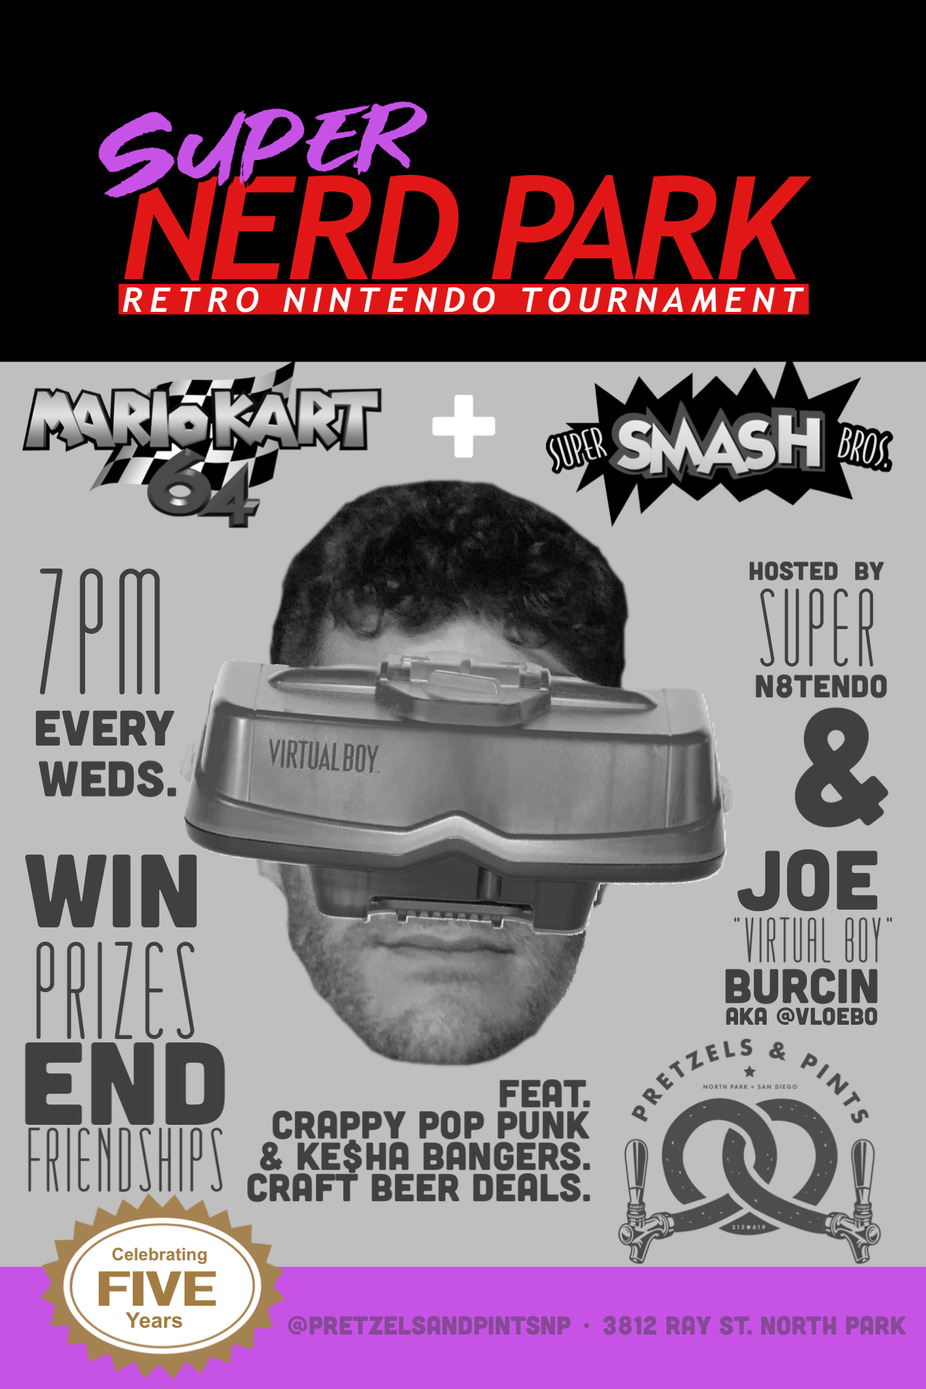 Super Nerd Park Retro Nintendo Tournament event photo